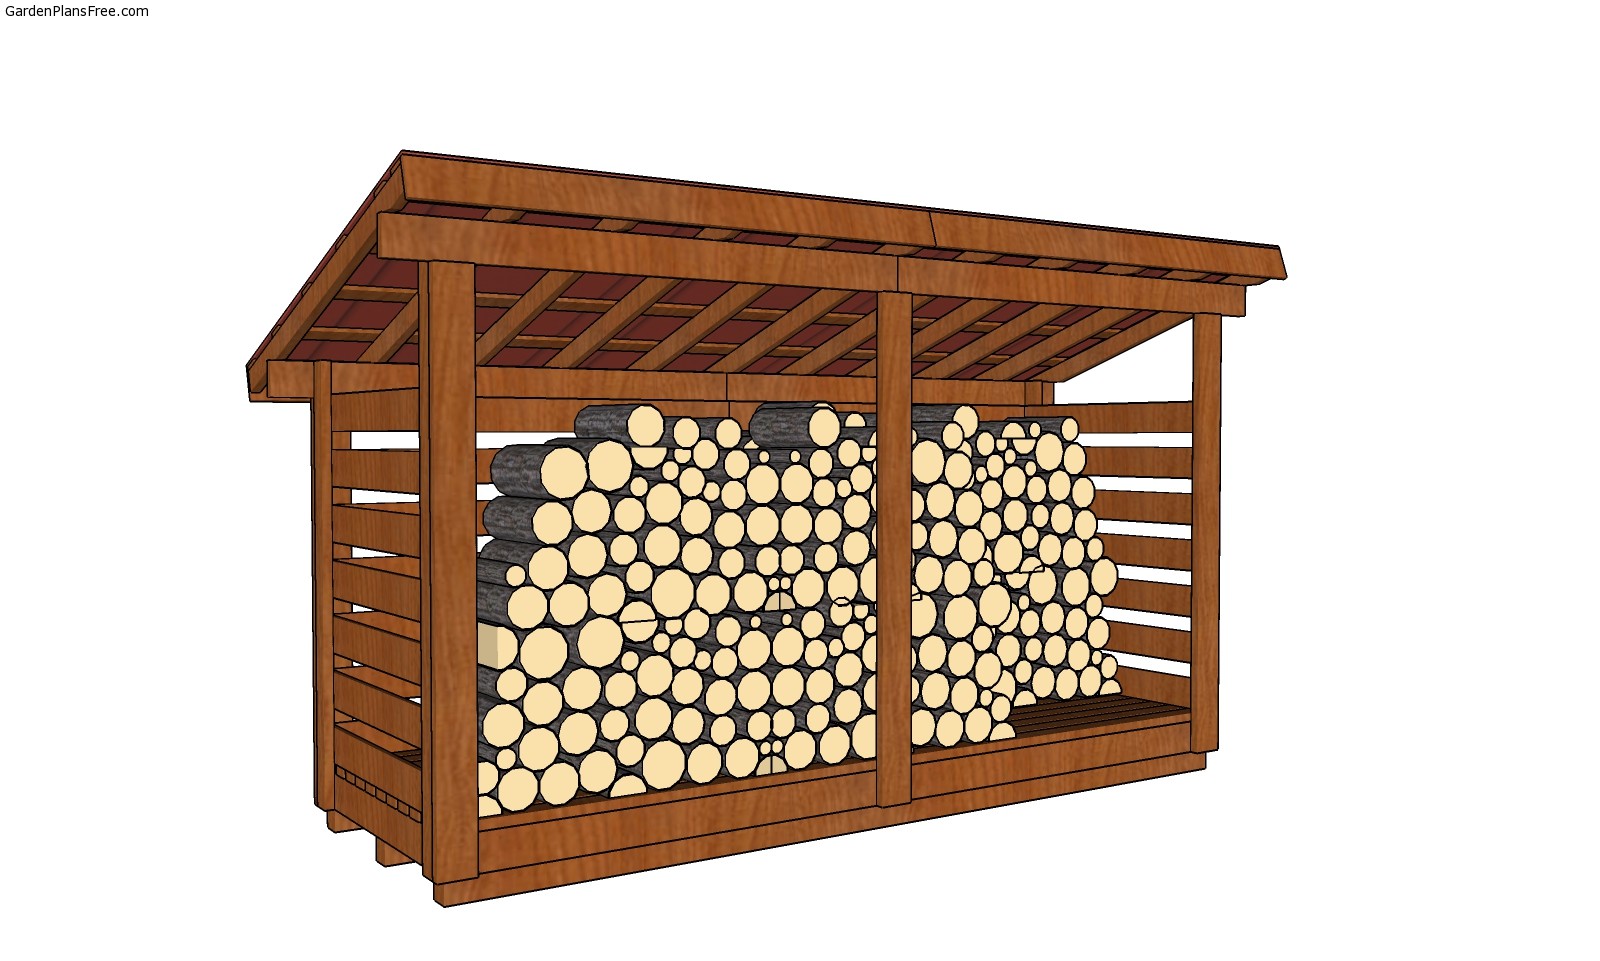 4x12 Firewood Shed Plans DIY Wooden Shed for Firewood Plan Download PDF